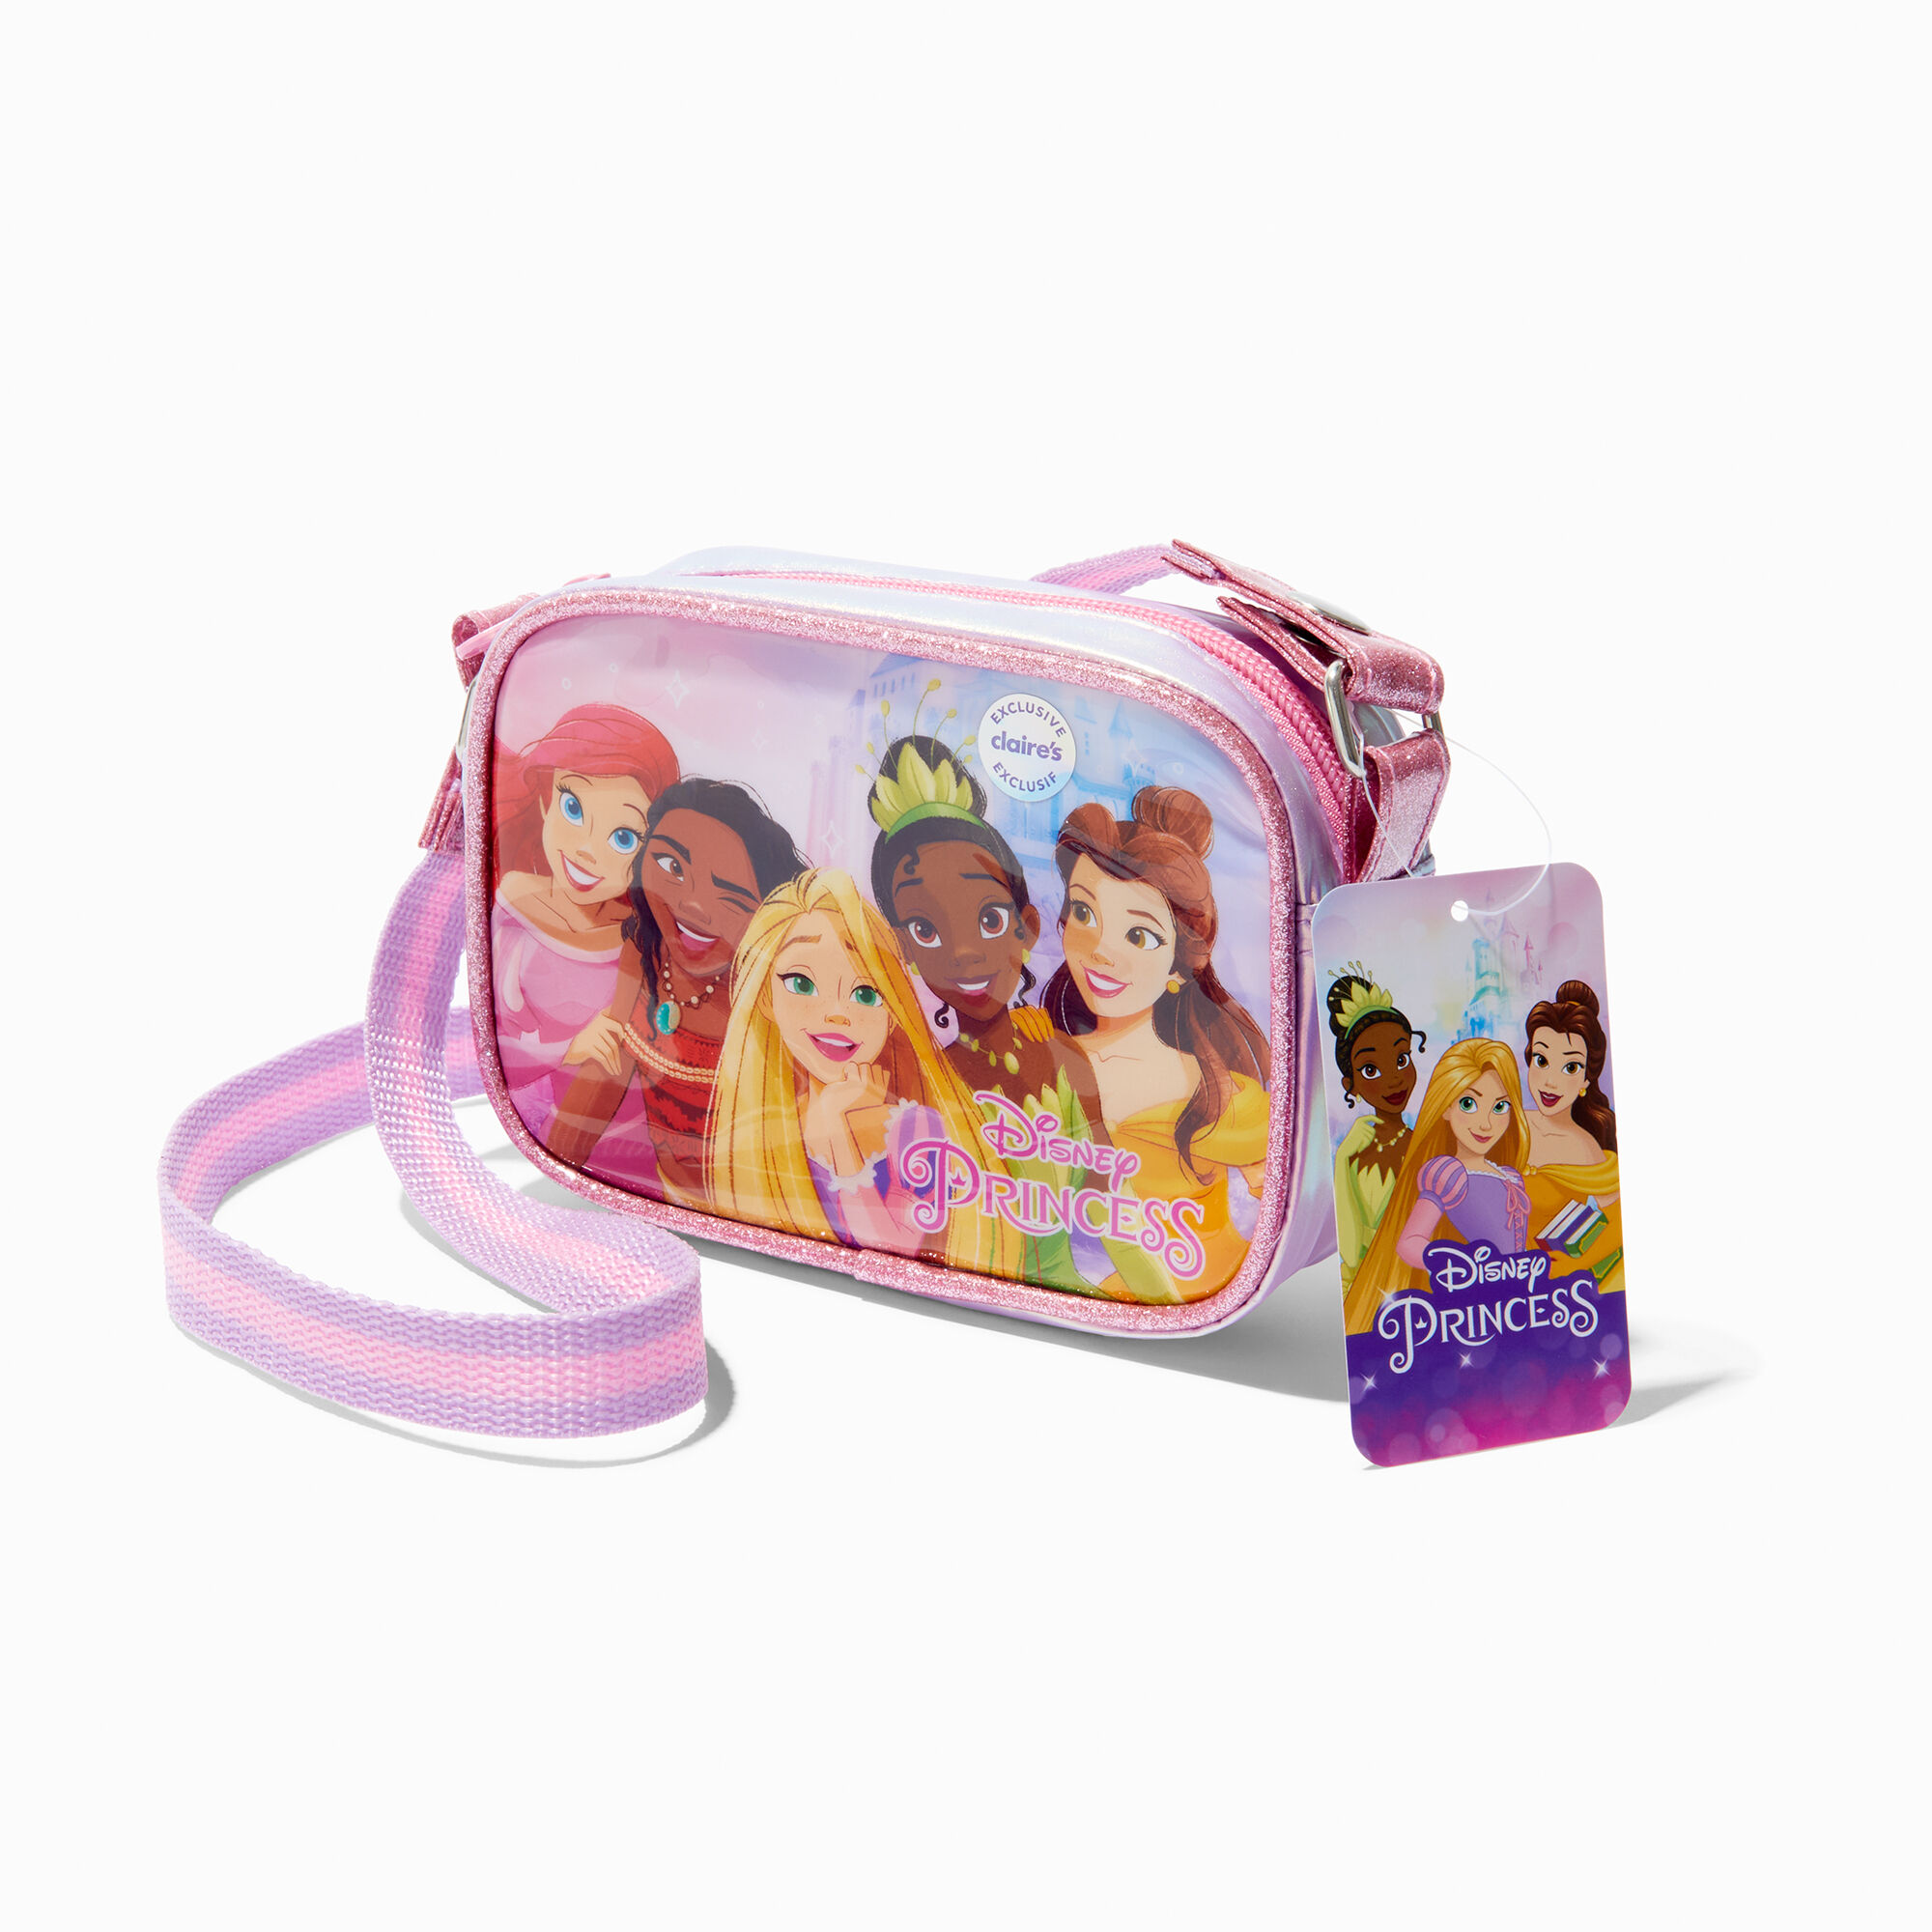 claire's exclusive ©disney princess mini handbag – pink